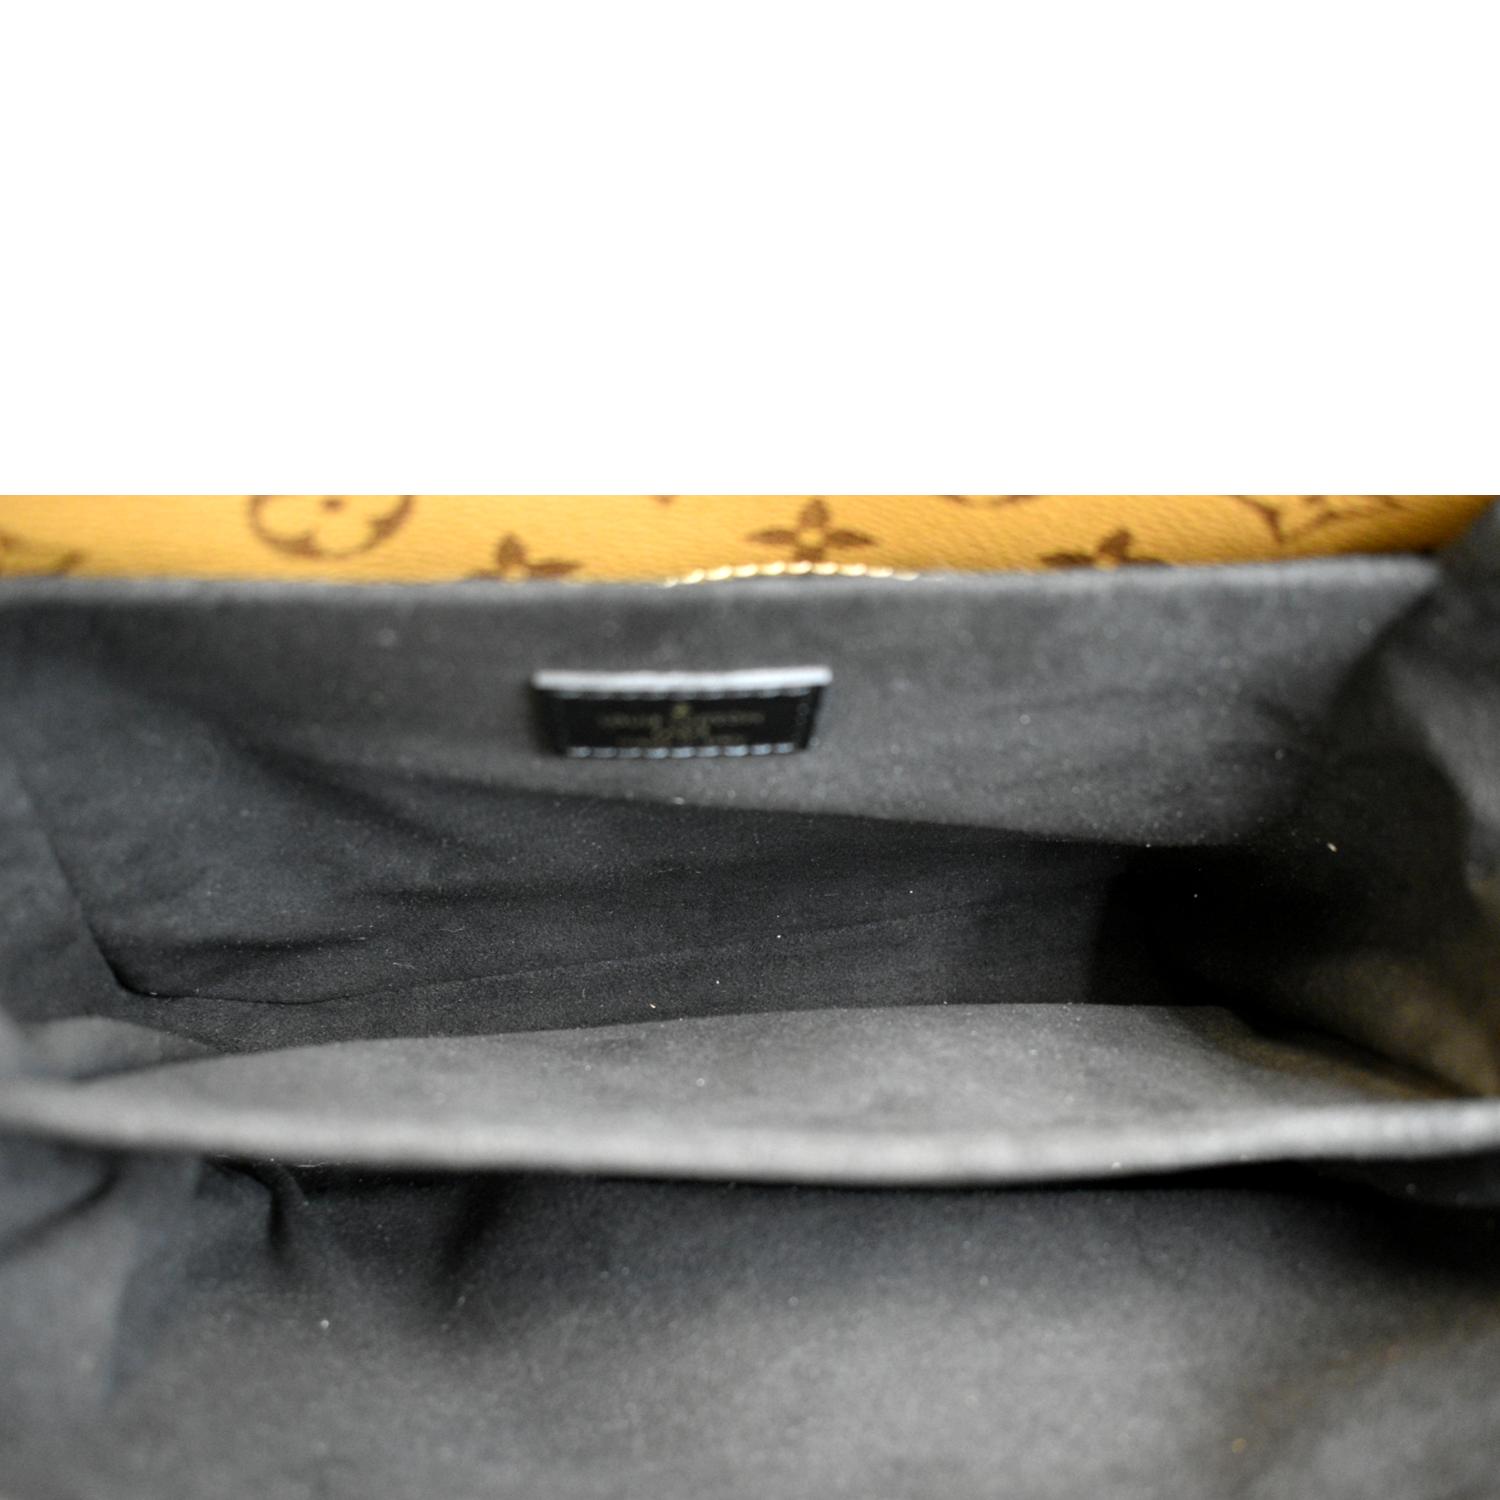 Pochette Métis Monogram Reverse - Women - Handbags